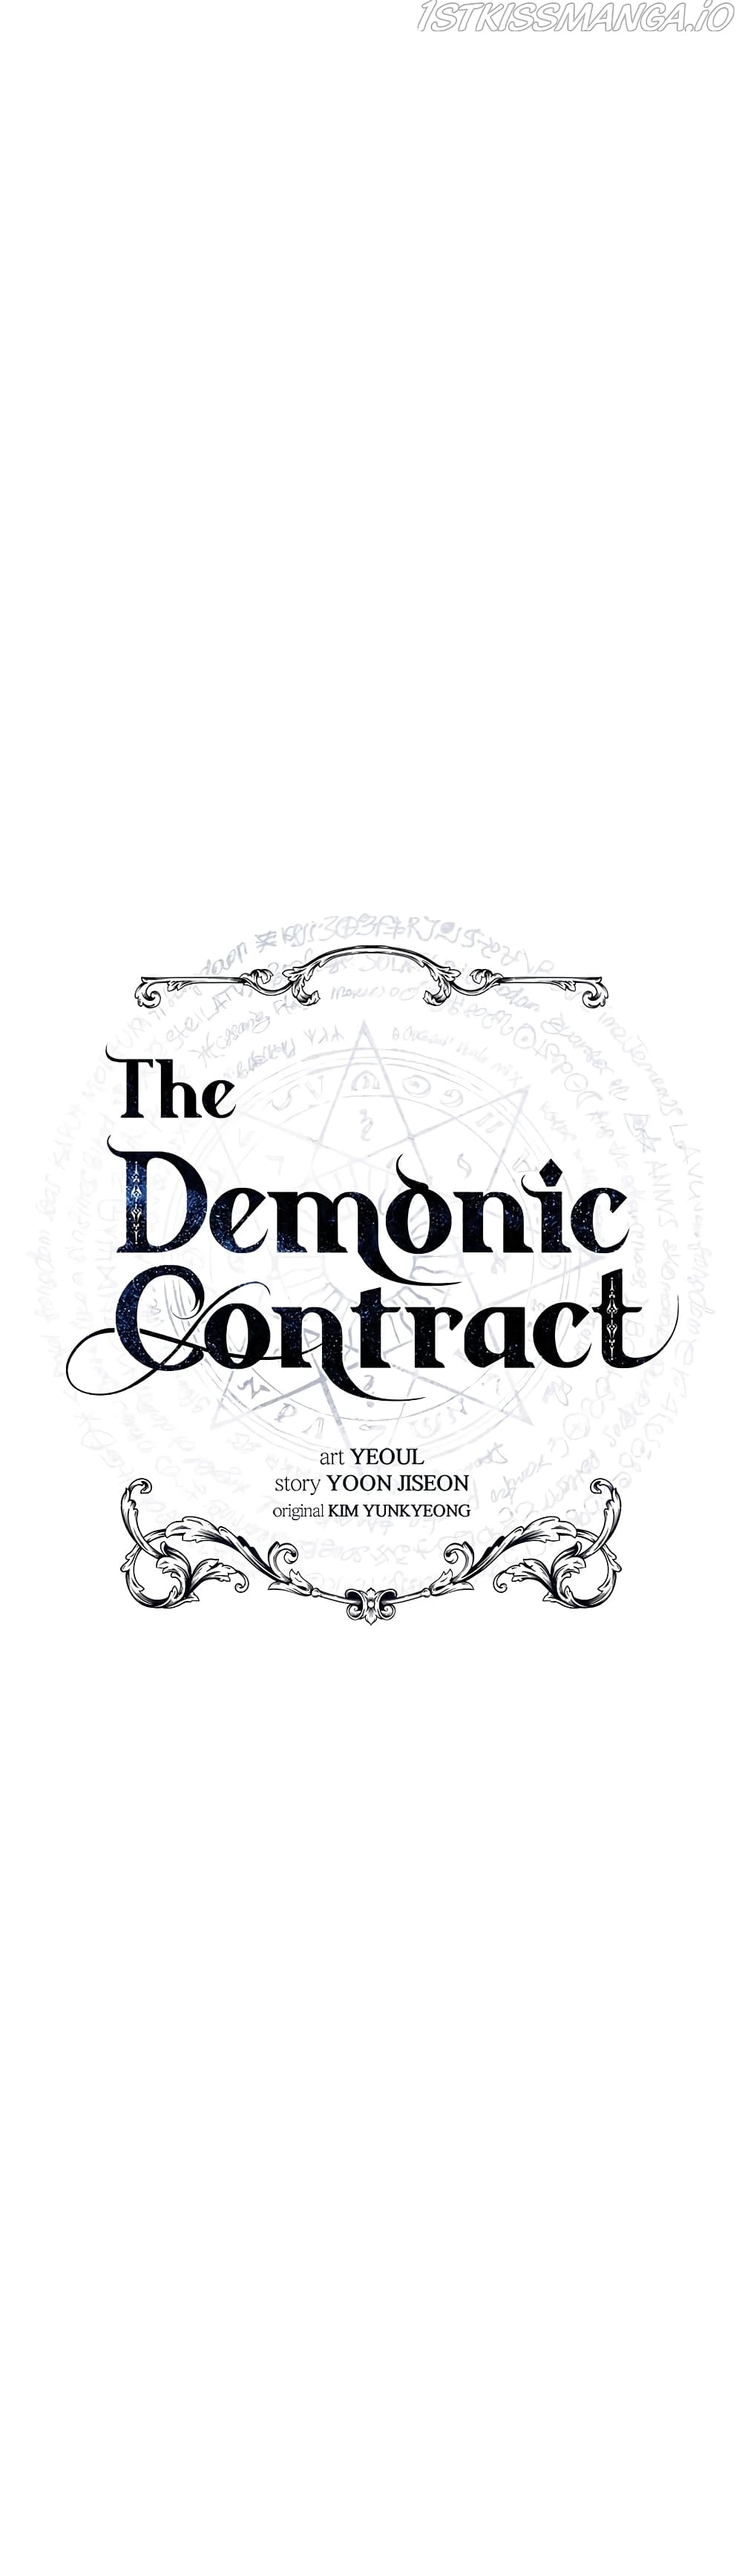 The Demonic Contract ตอนที่ 57 (5)